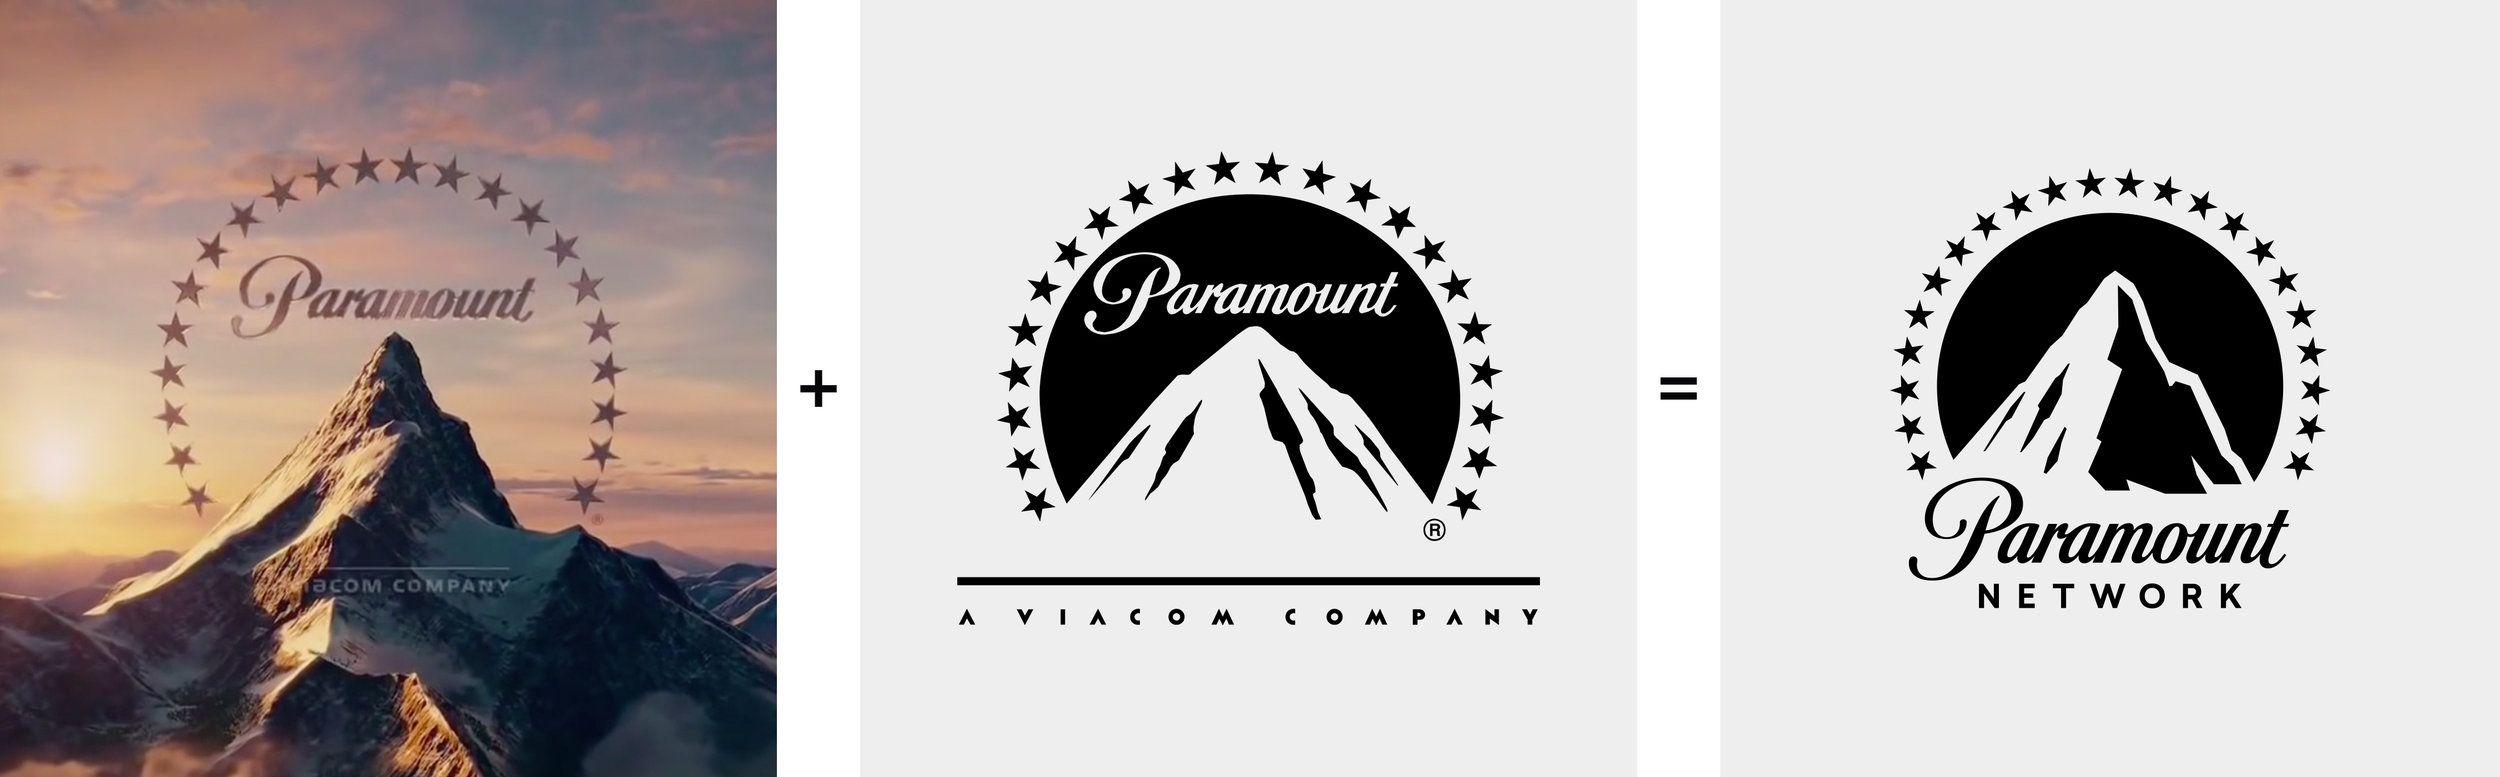 Paramount Network Logo - Paramount Network — BRANDON KENNEDY